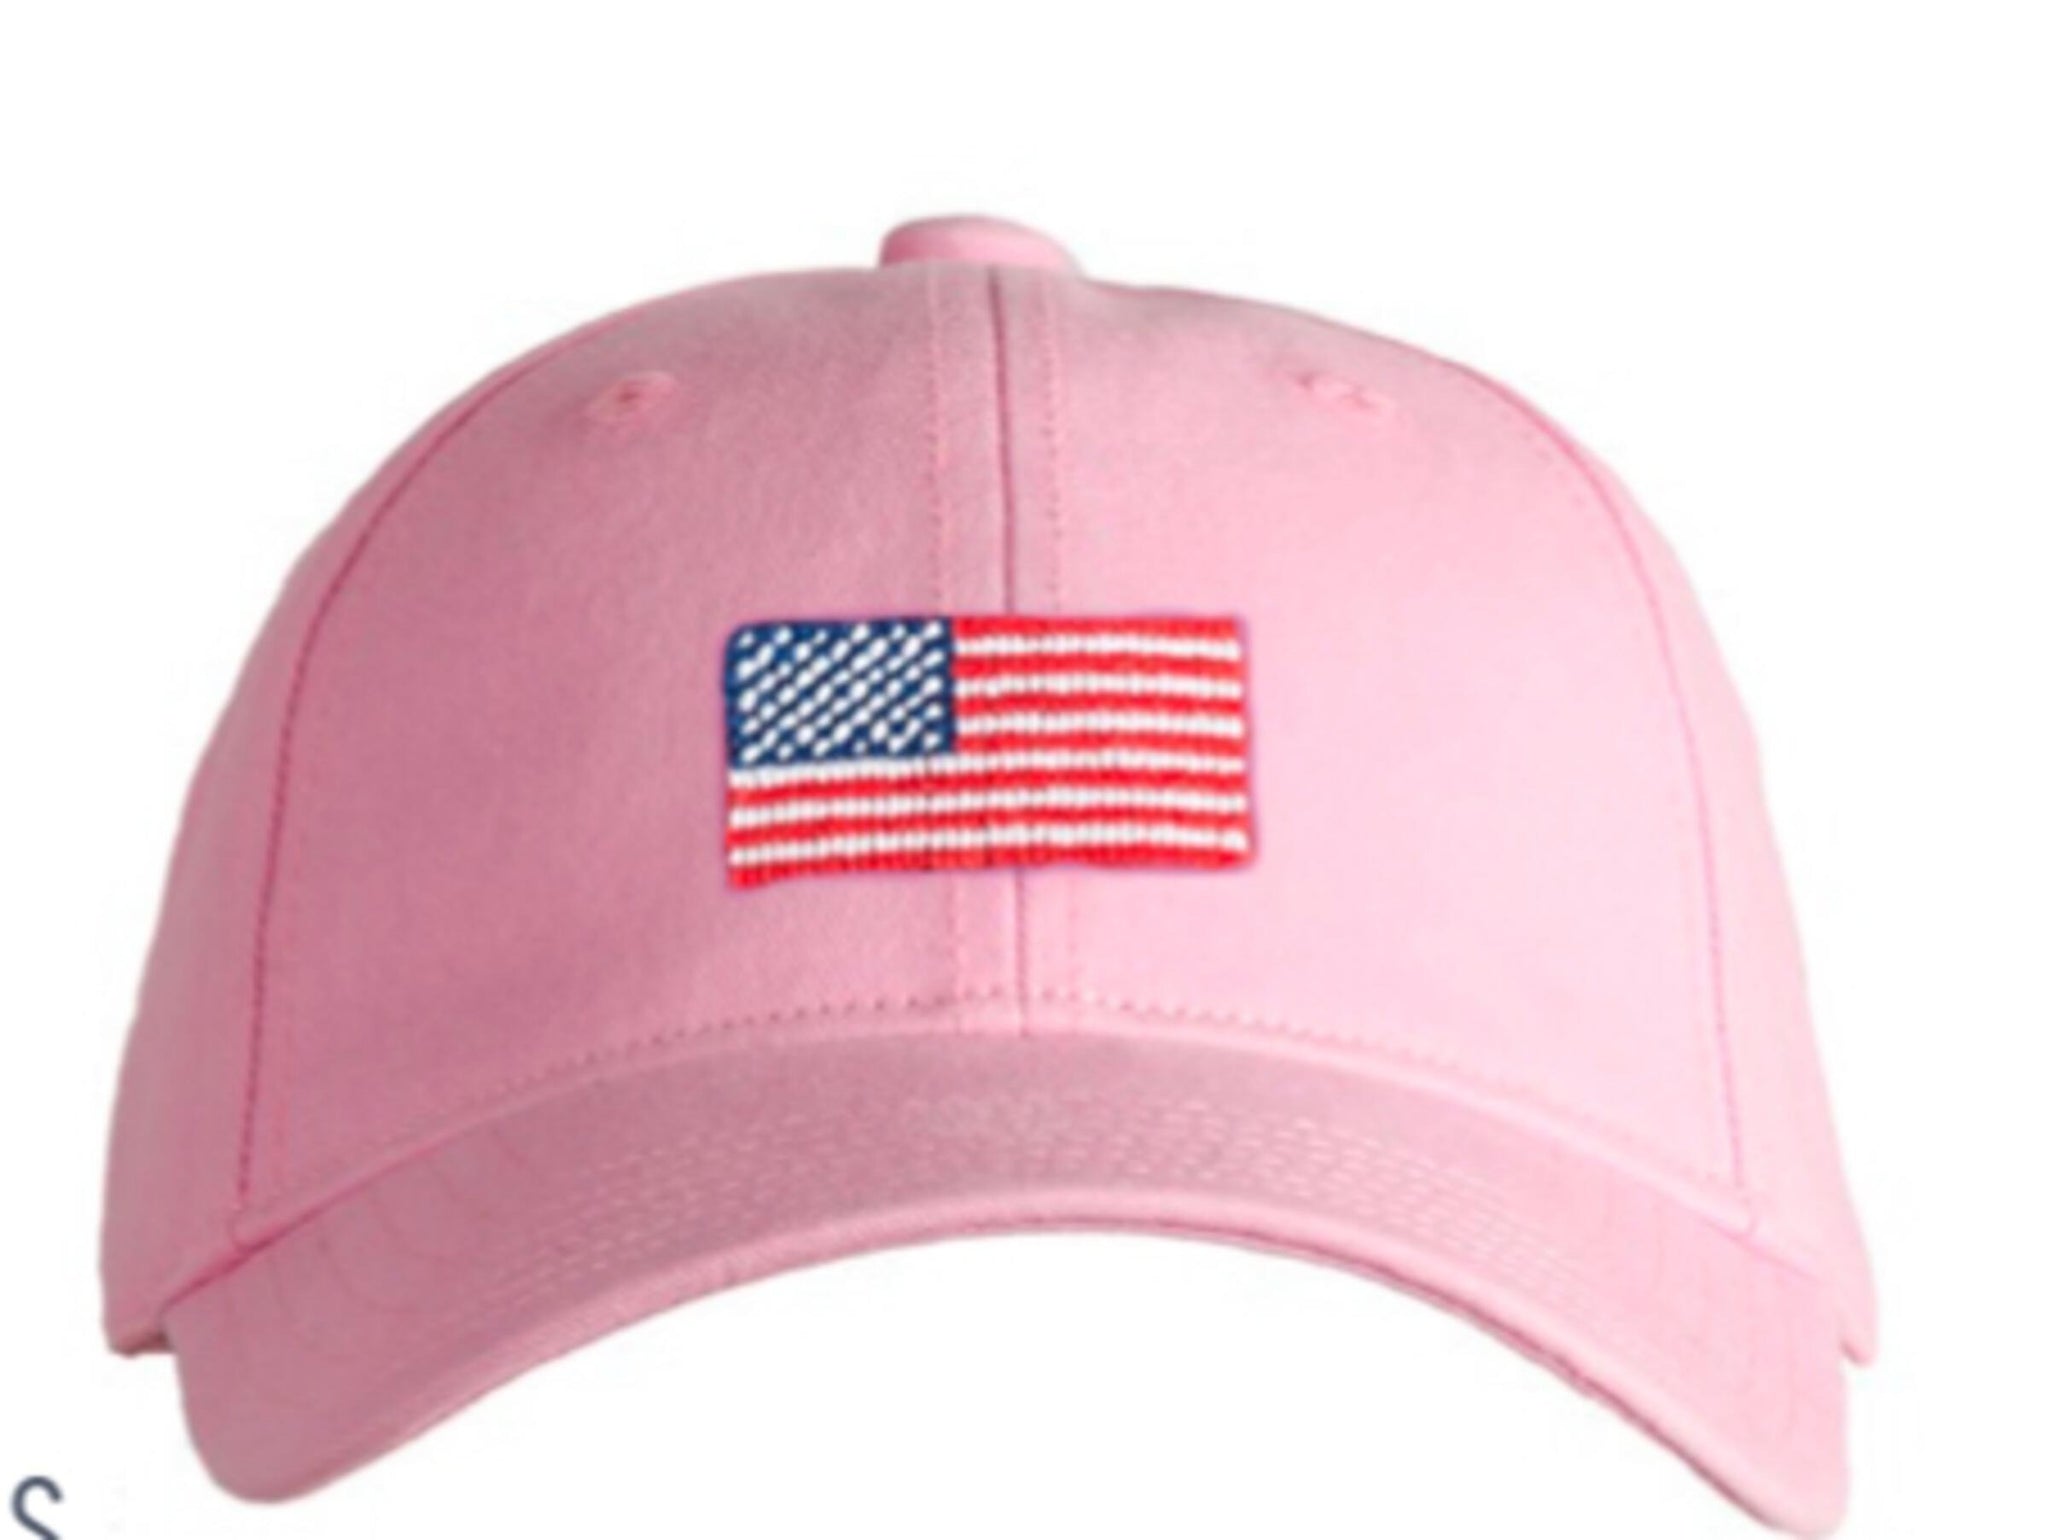 American Flag on Light Pink Kids Hat